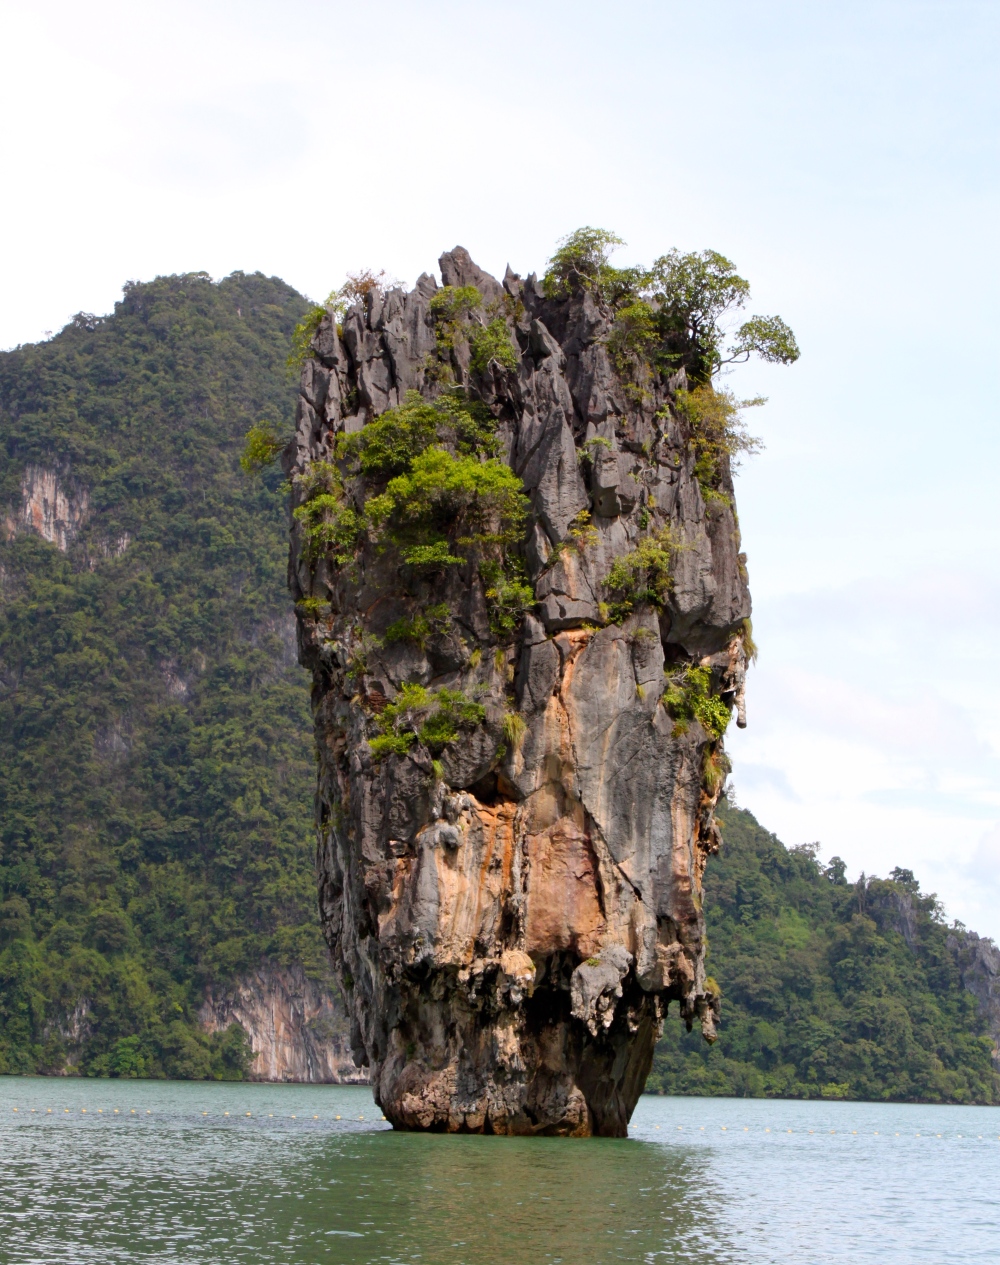 Khao Phing Kan aka James Bond Island, Thailand